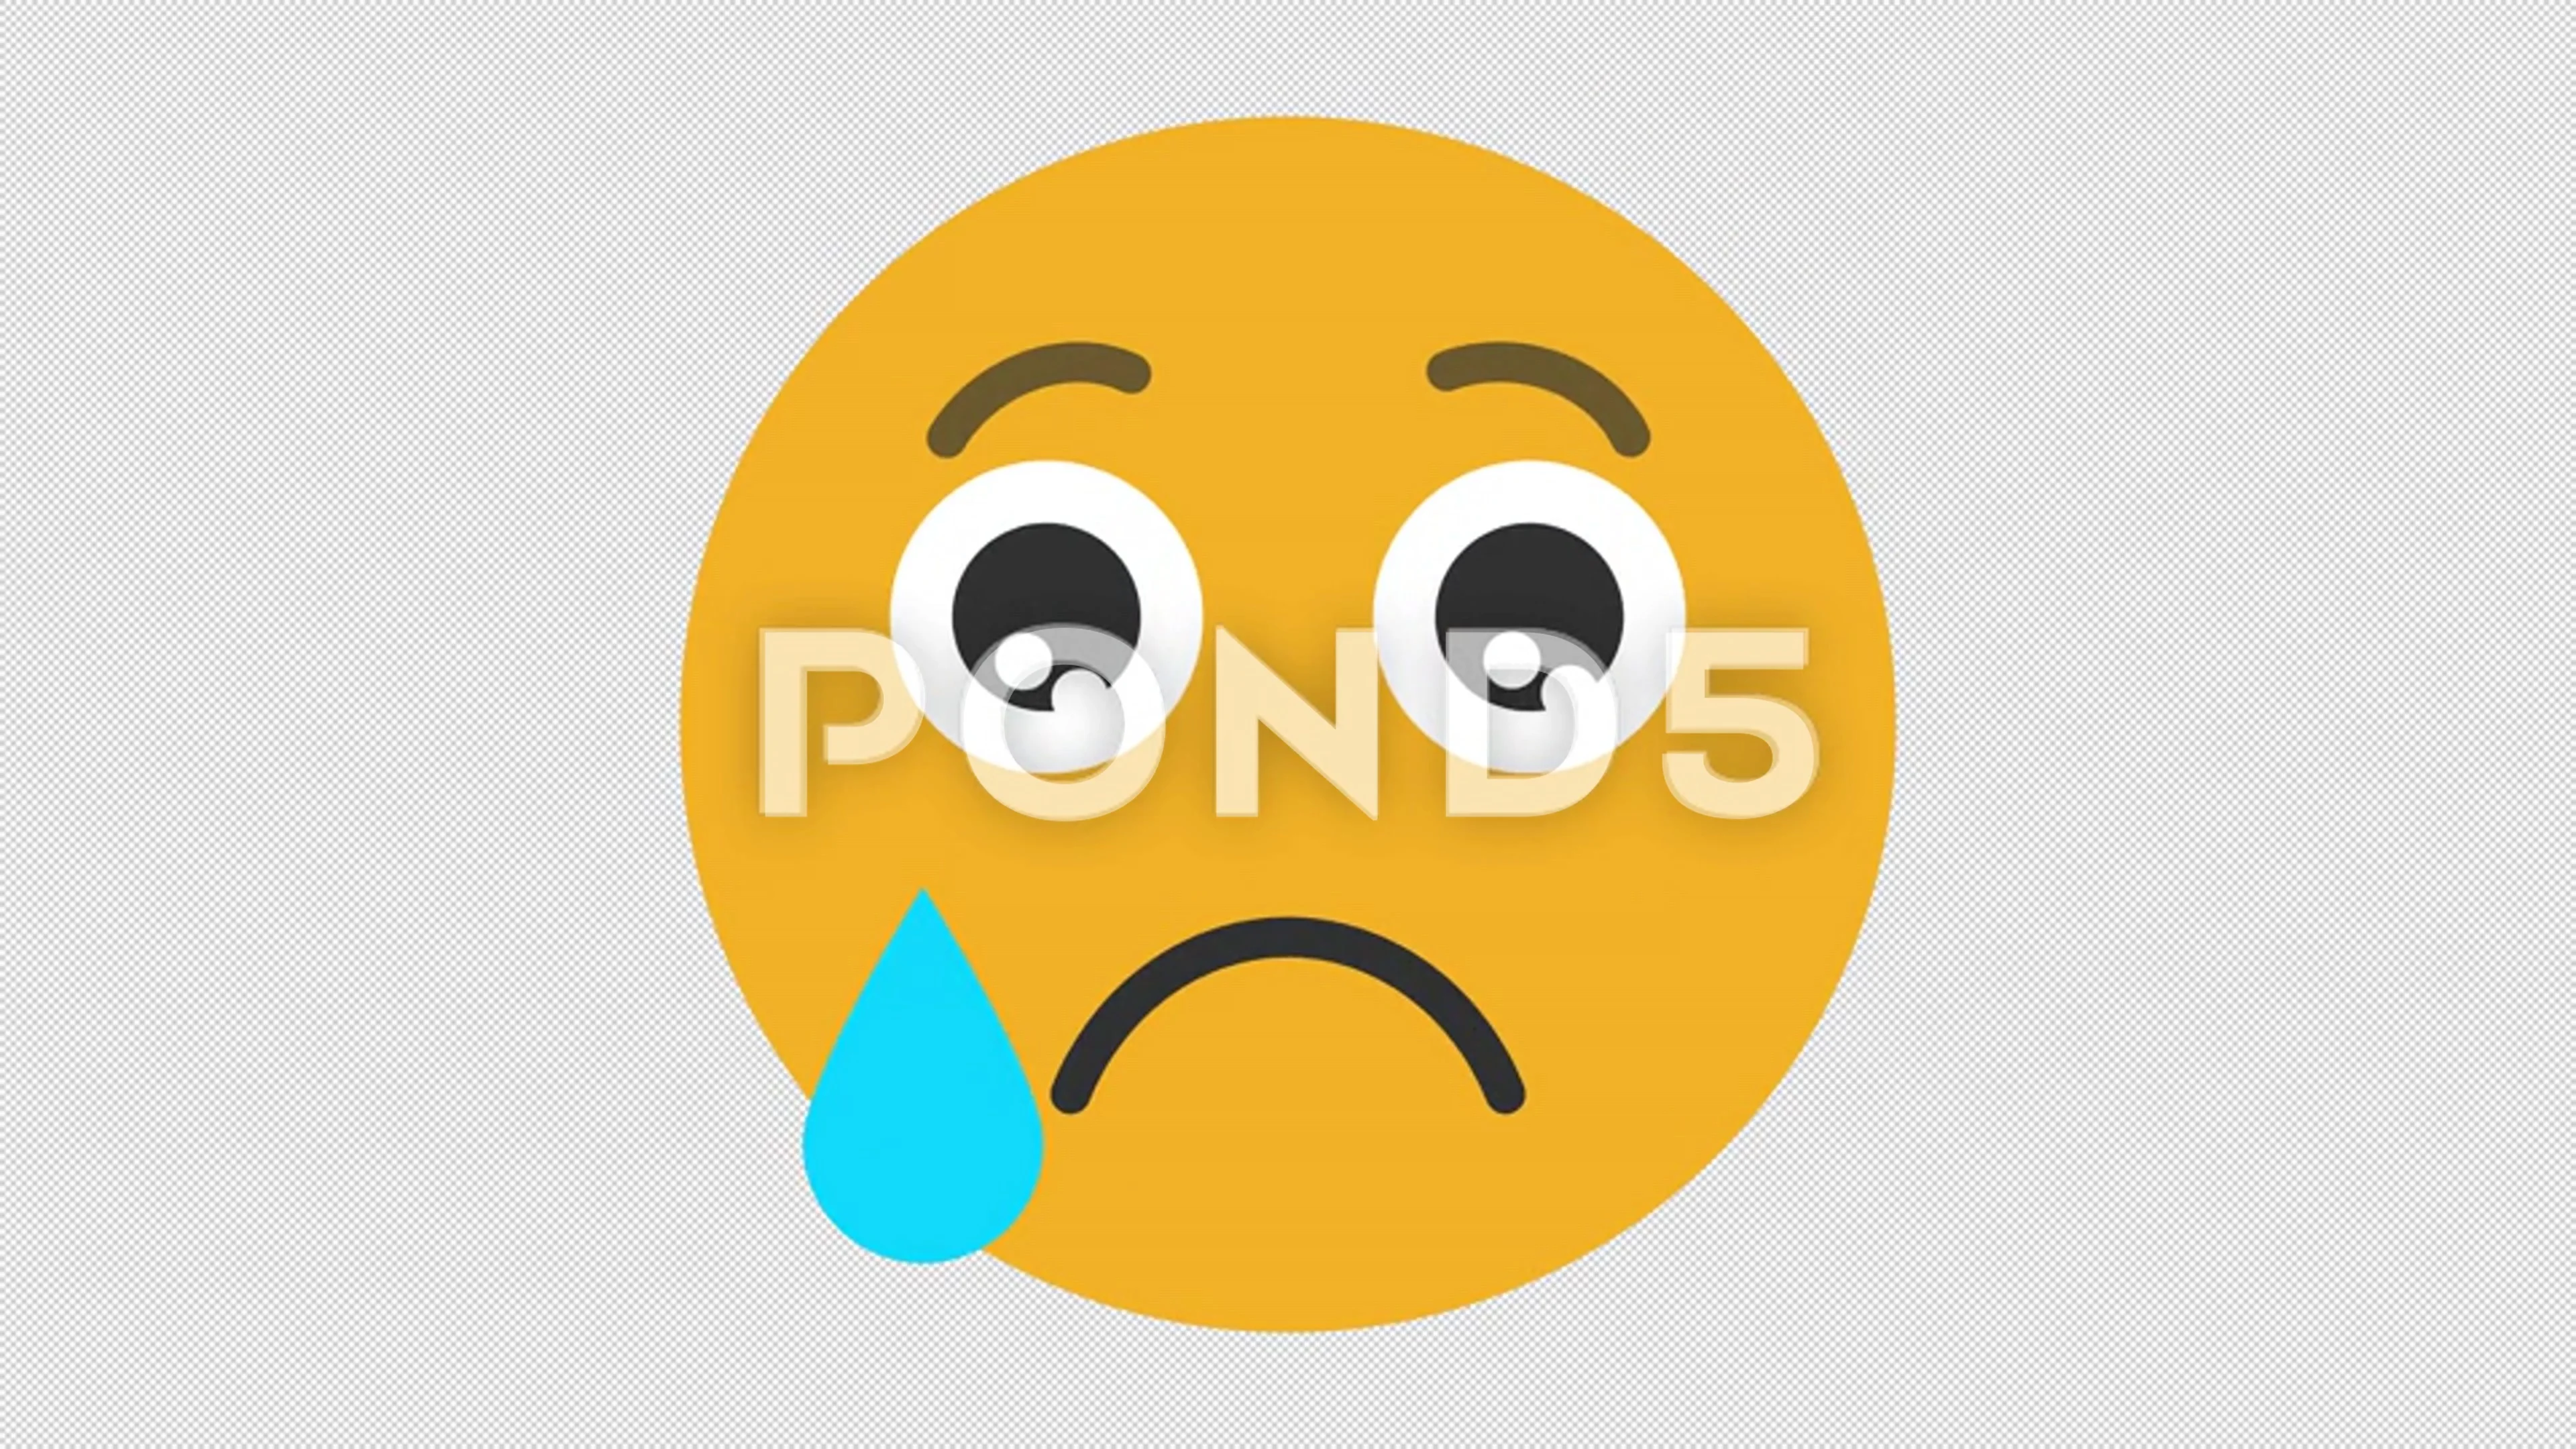 happy crying face emoji